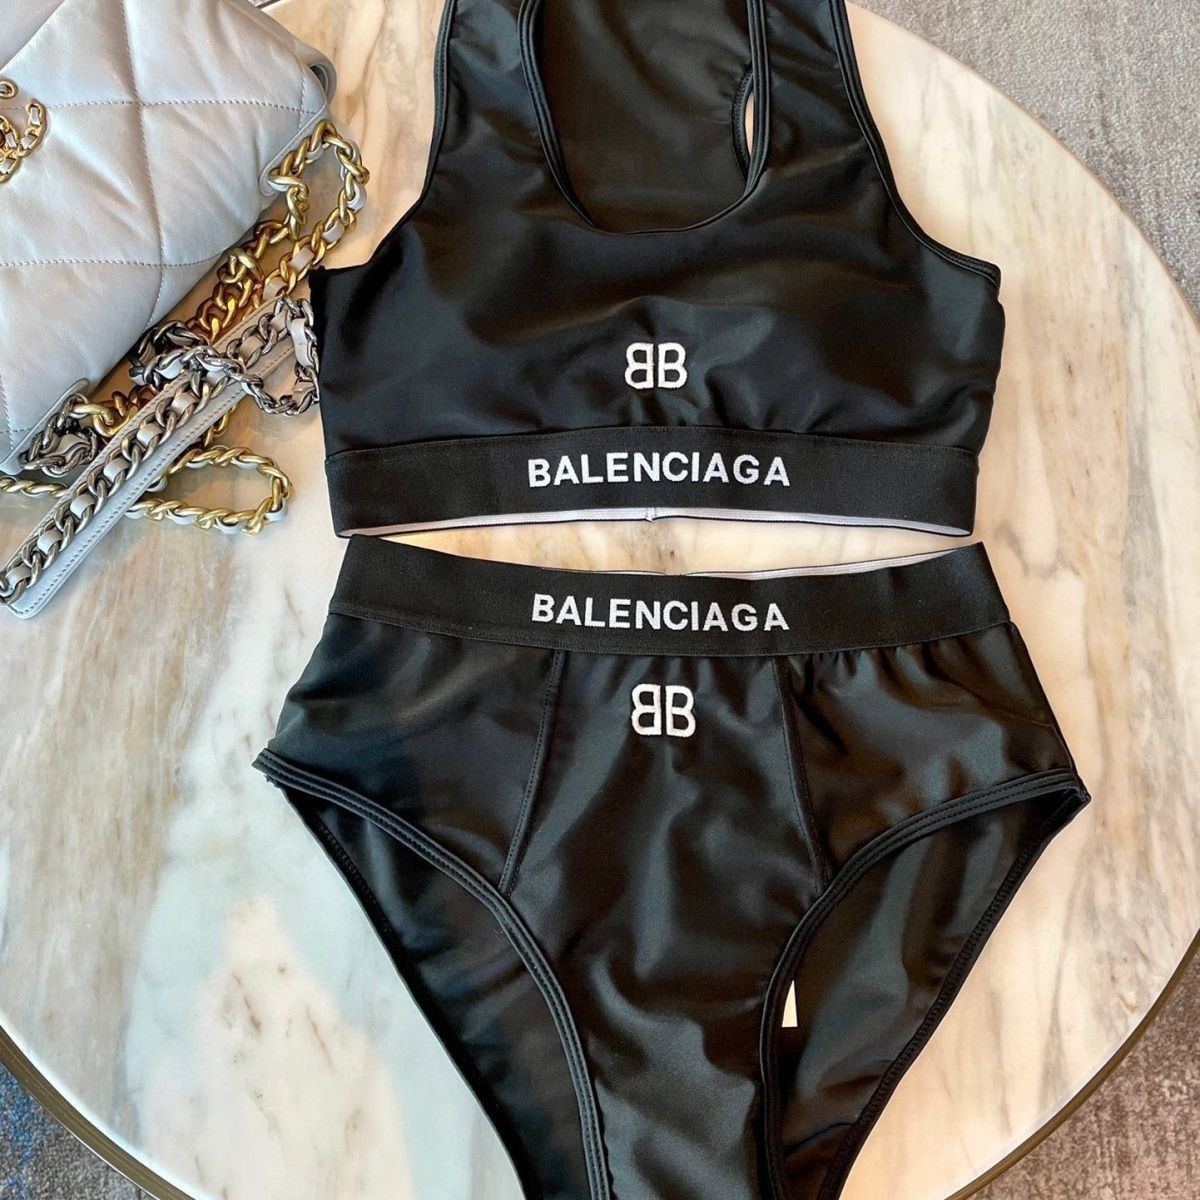 Женский комплект белья Balenciaga, купальник Баленсиага